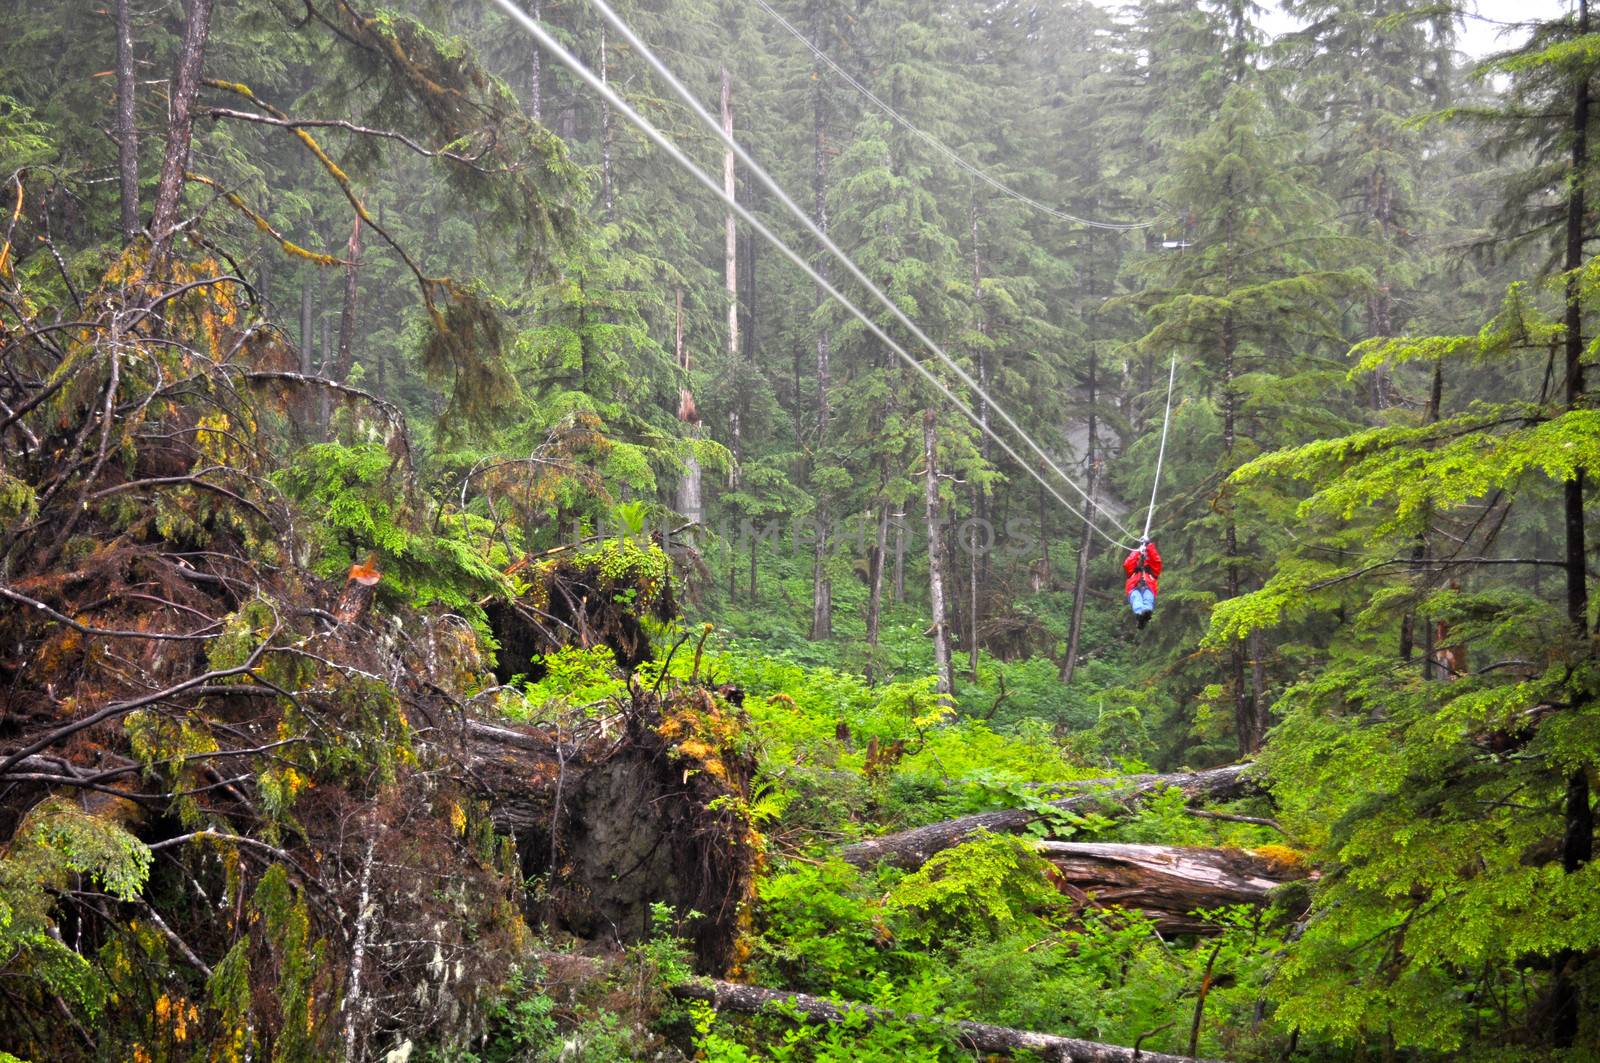 Ziplining in the forest of Ketchikan, Alaska